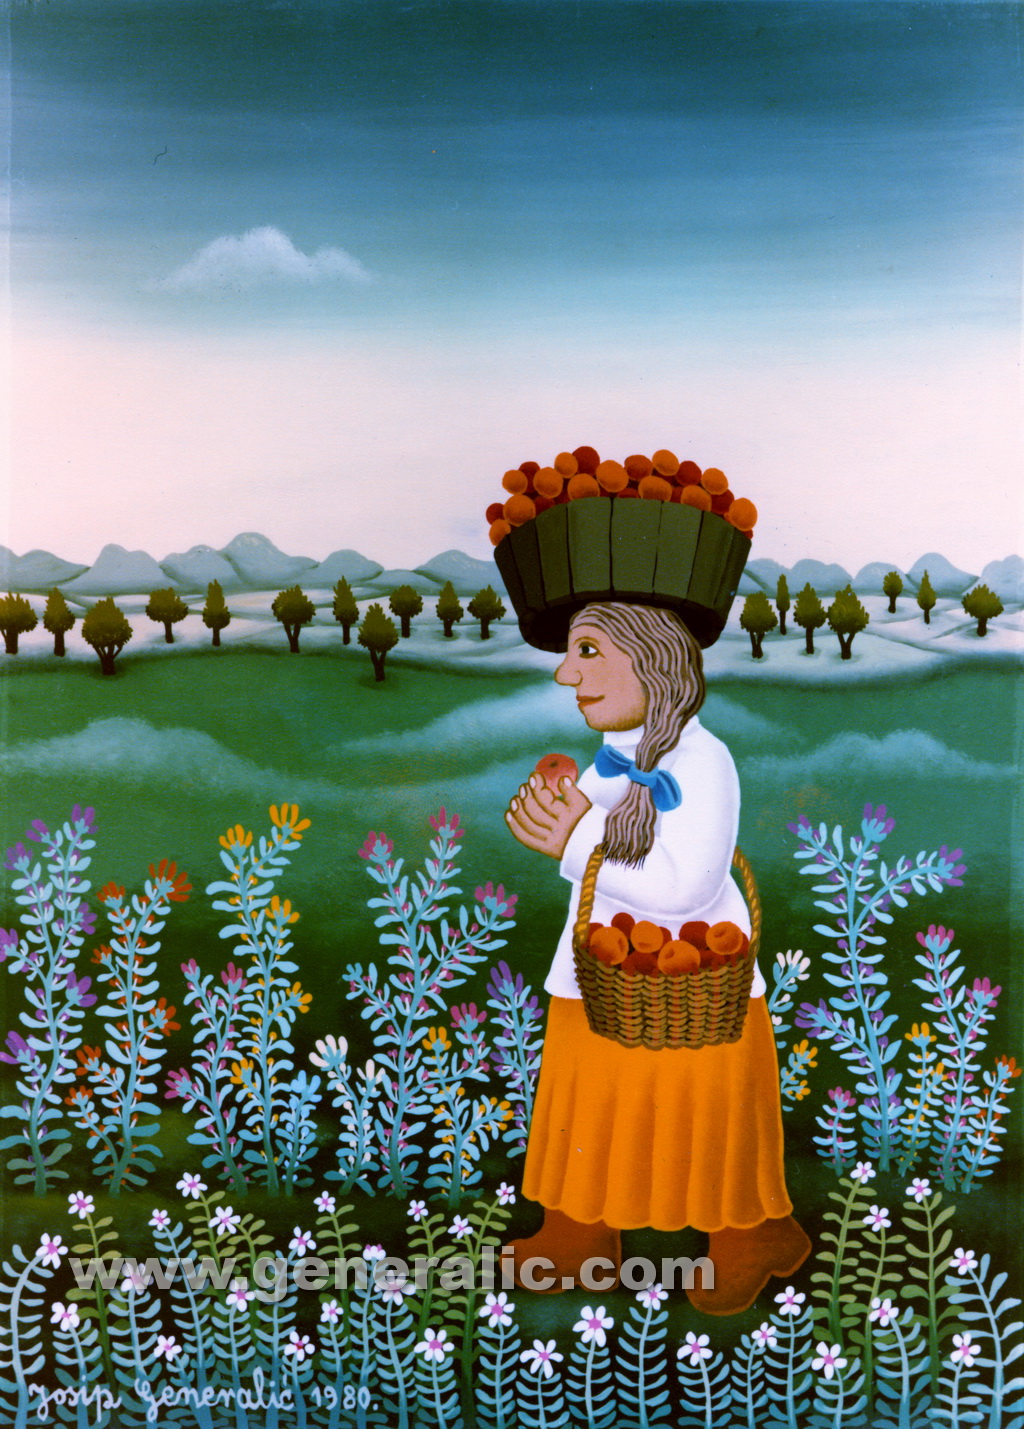 Josip Generalic, 1980, Woman with apples, oil on glass, 33x24 cm